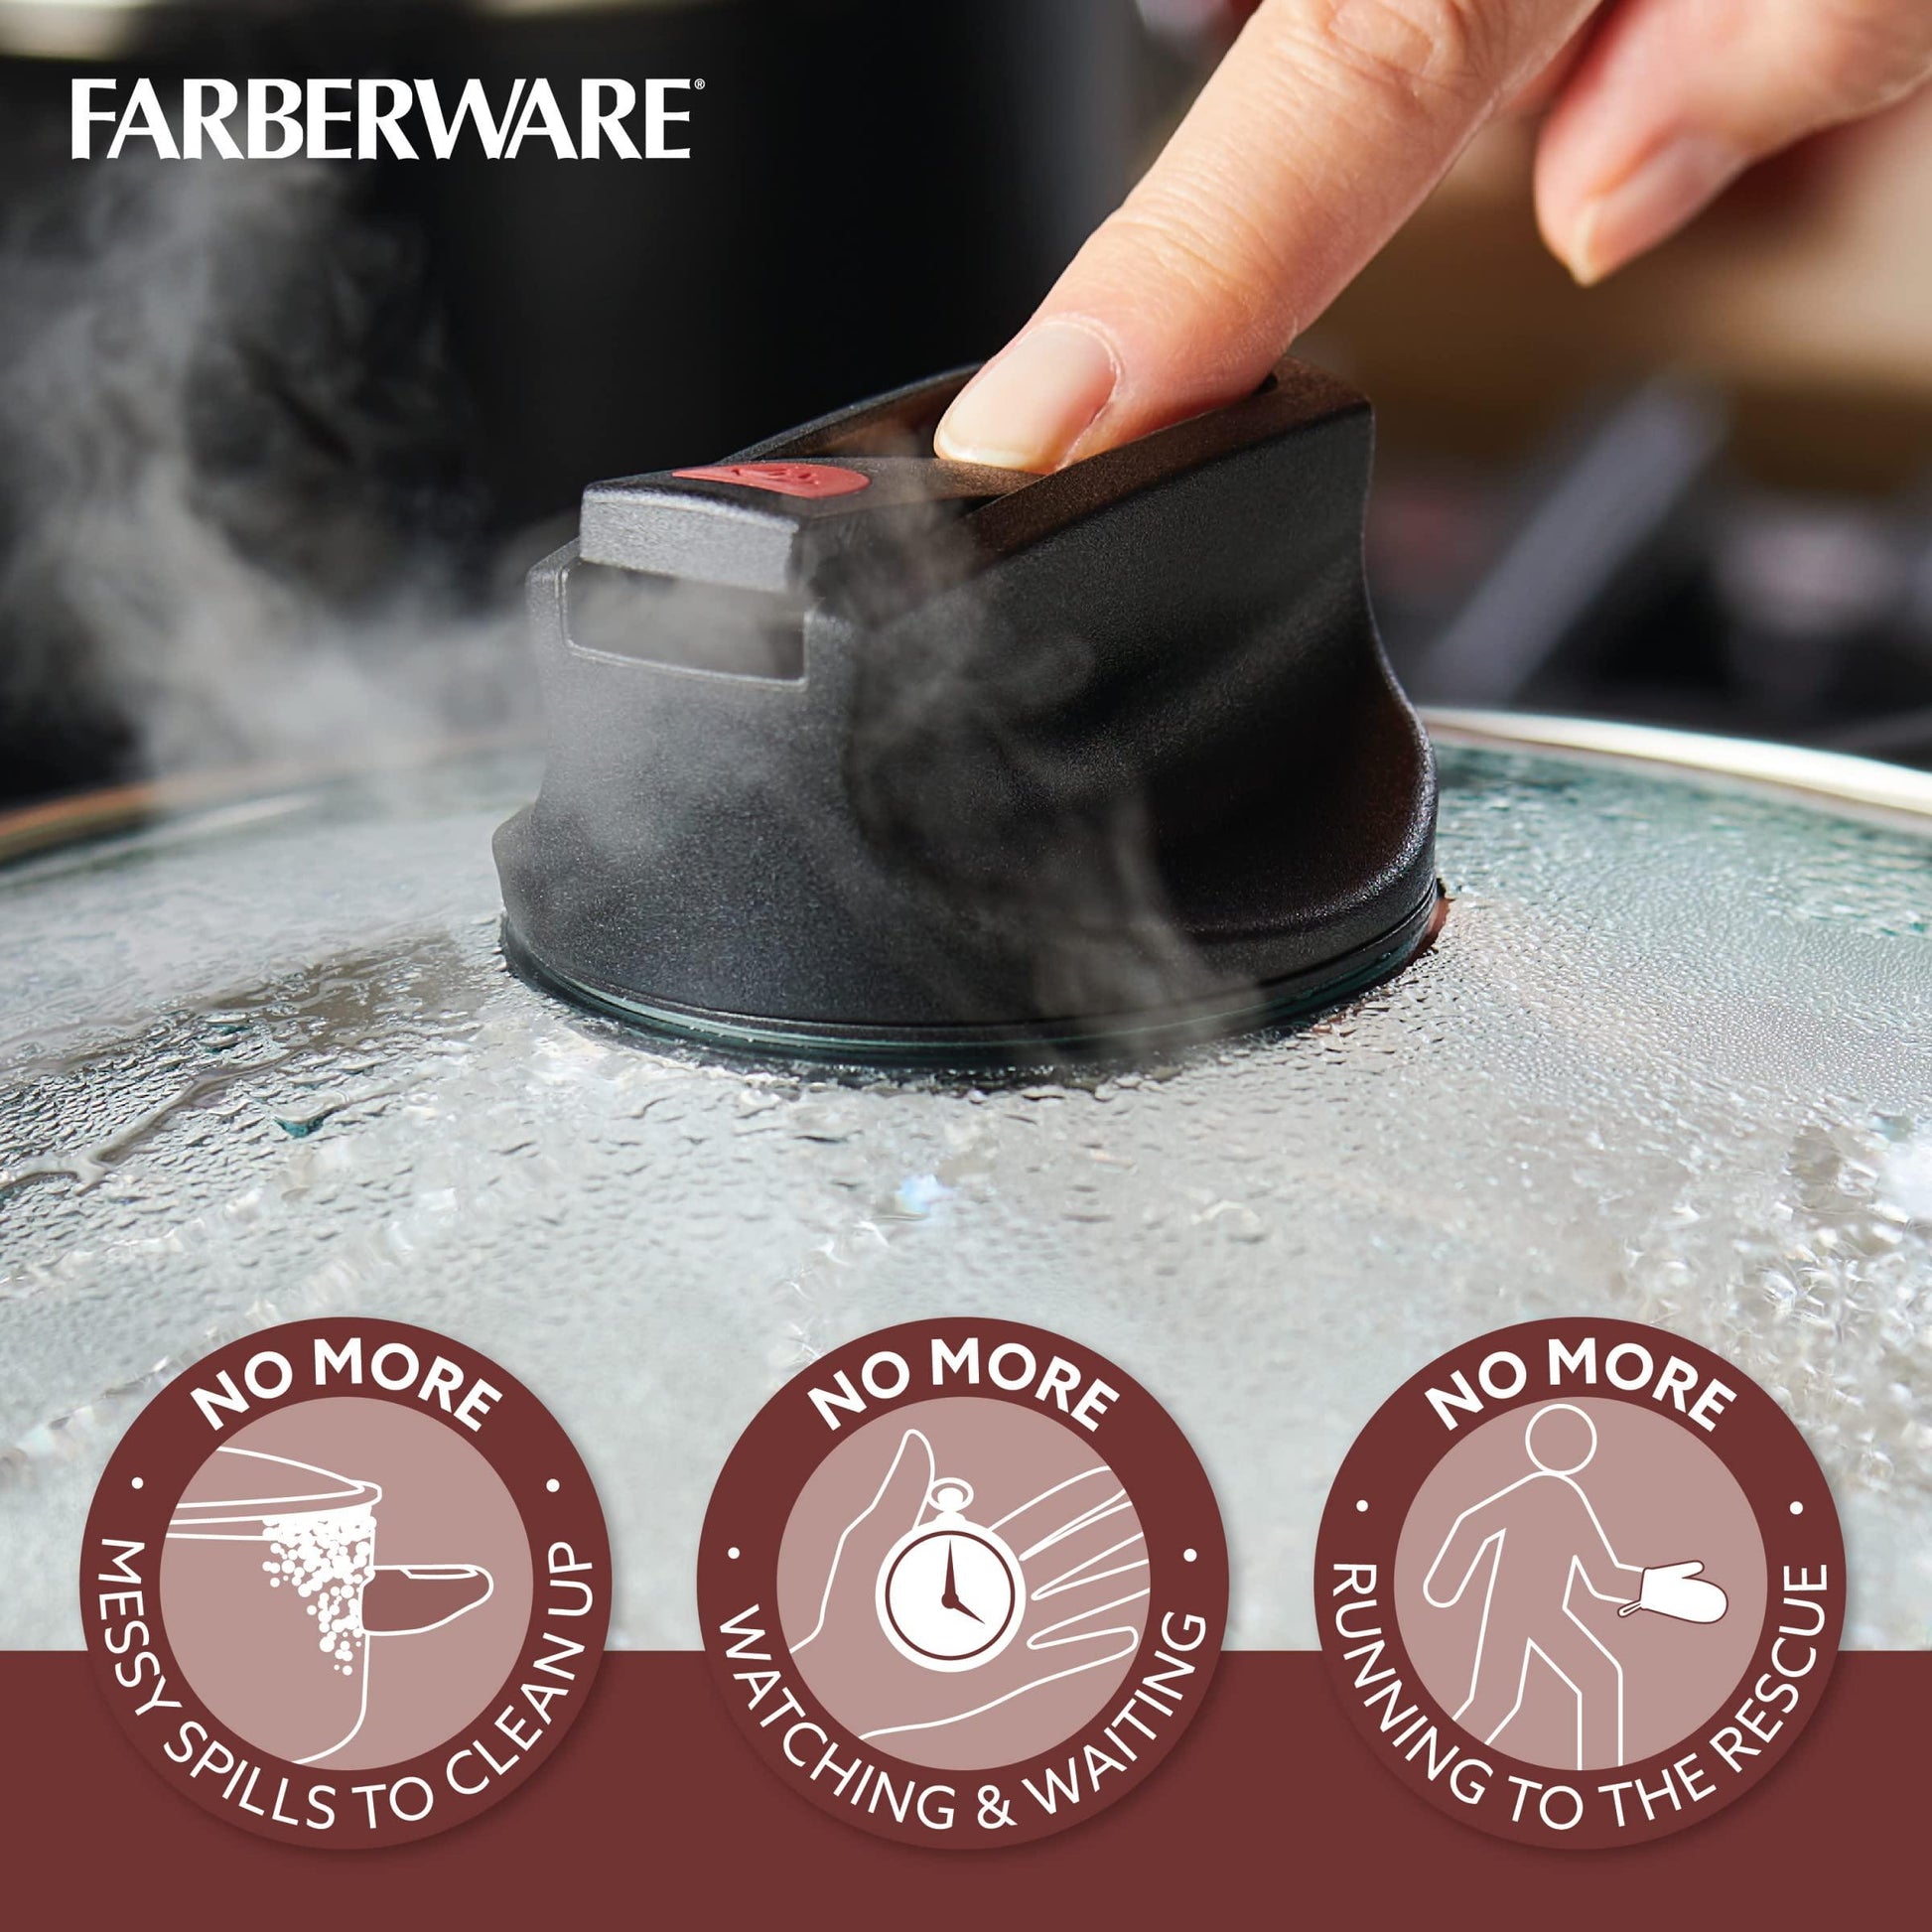 Farberware Smart Control Nonstick Jumbo Cooker/Saute Pan with Lid and Helper Handle, 6 Quart, Black - CookCave